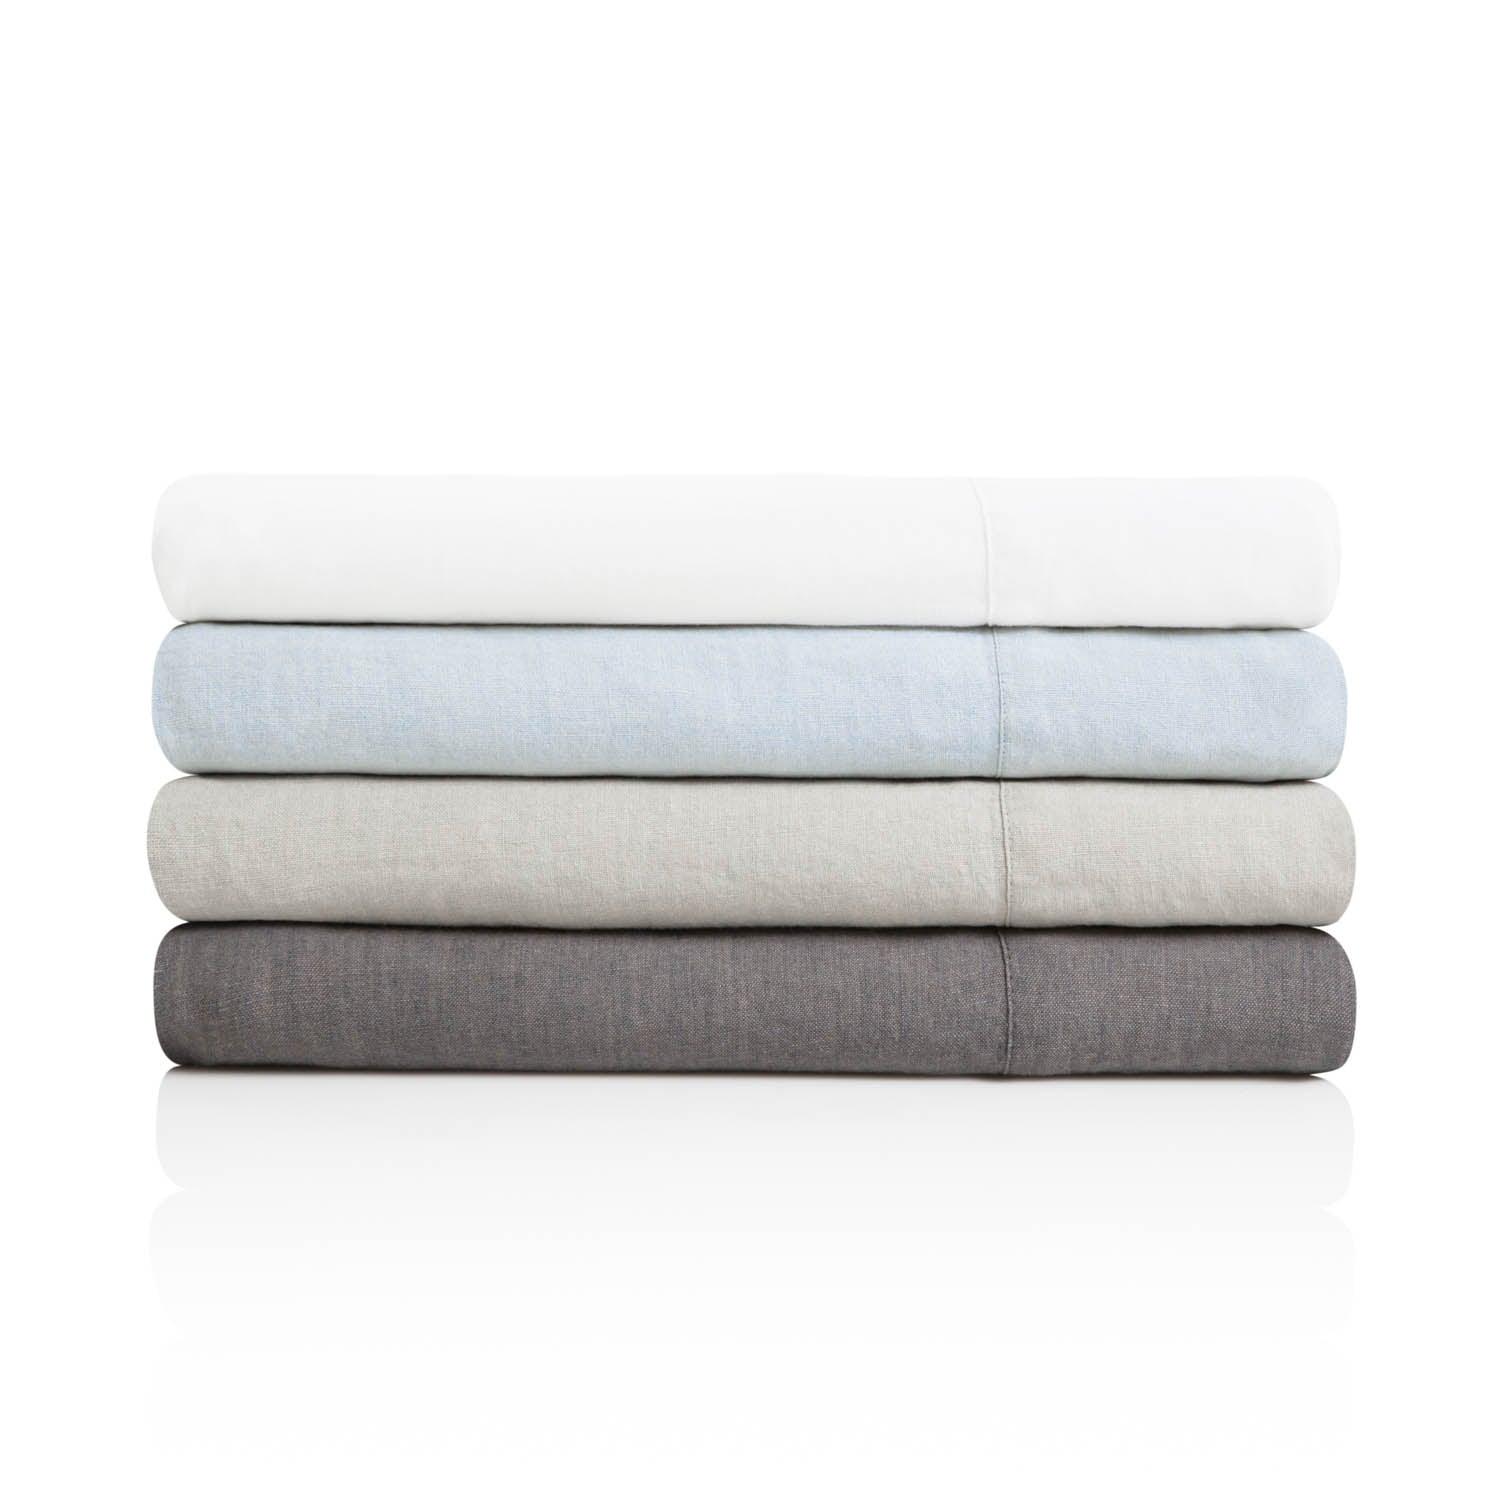 Woven French Linen Sheet Set - beddingbag.com